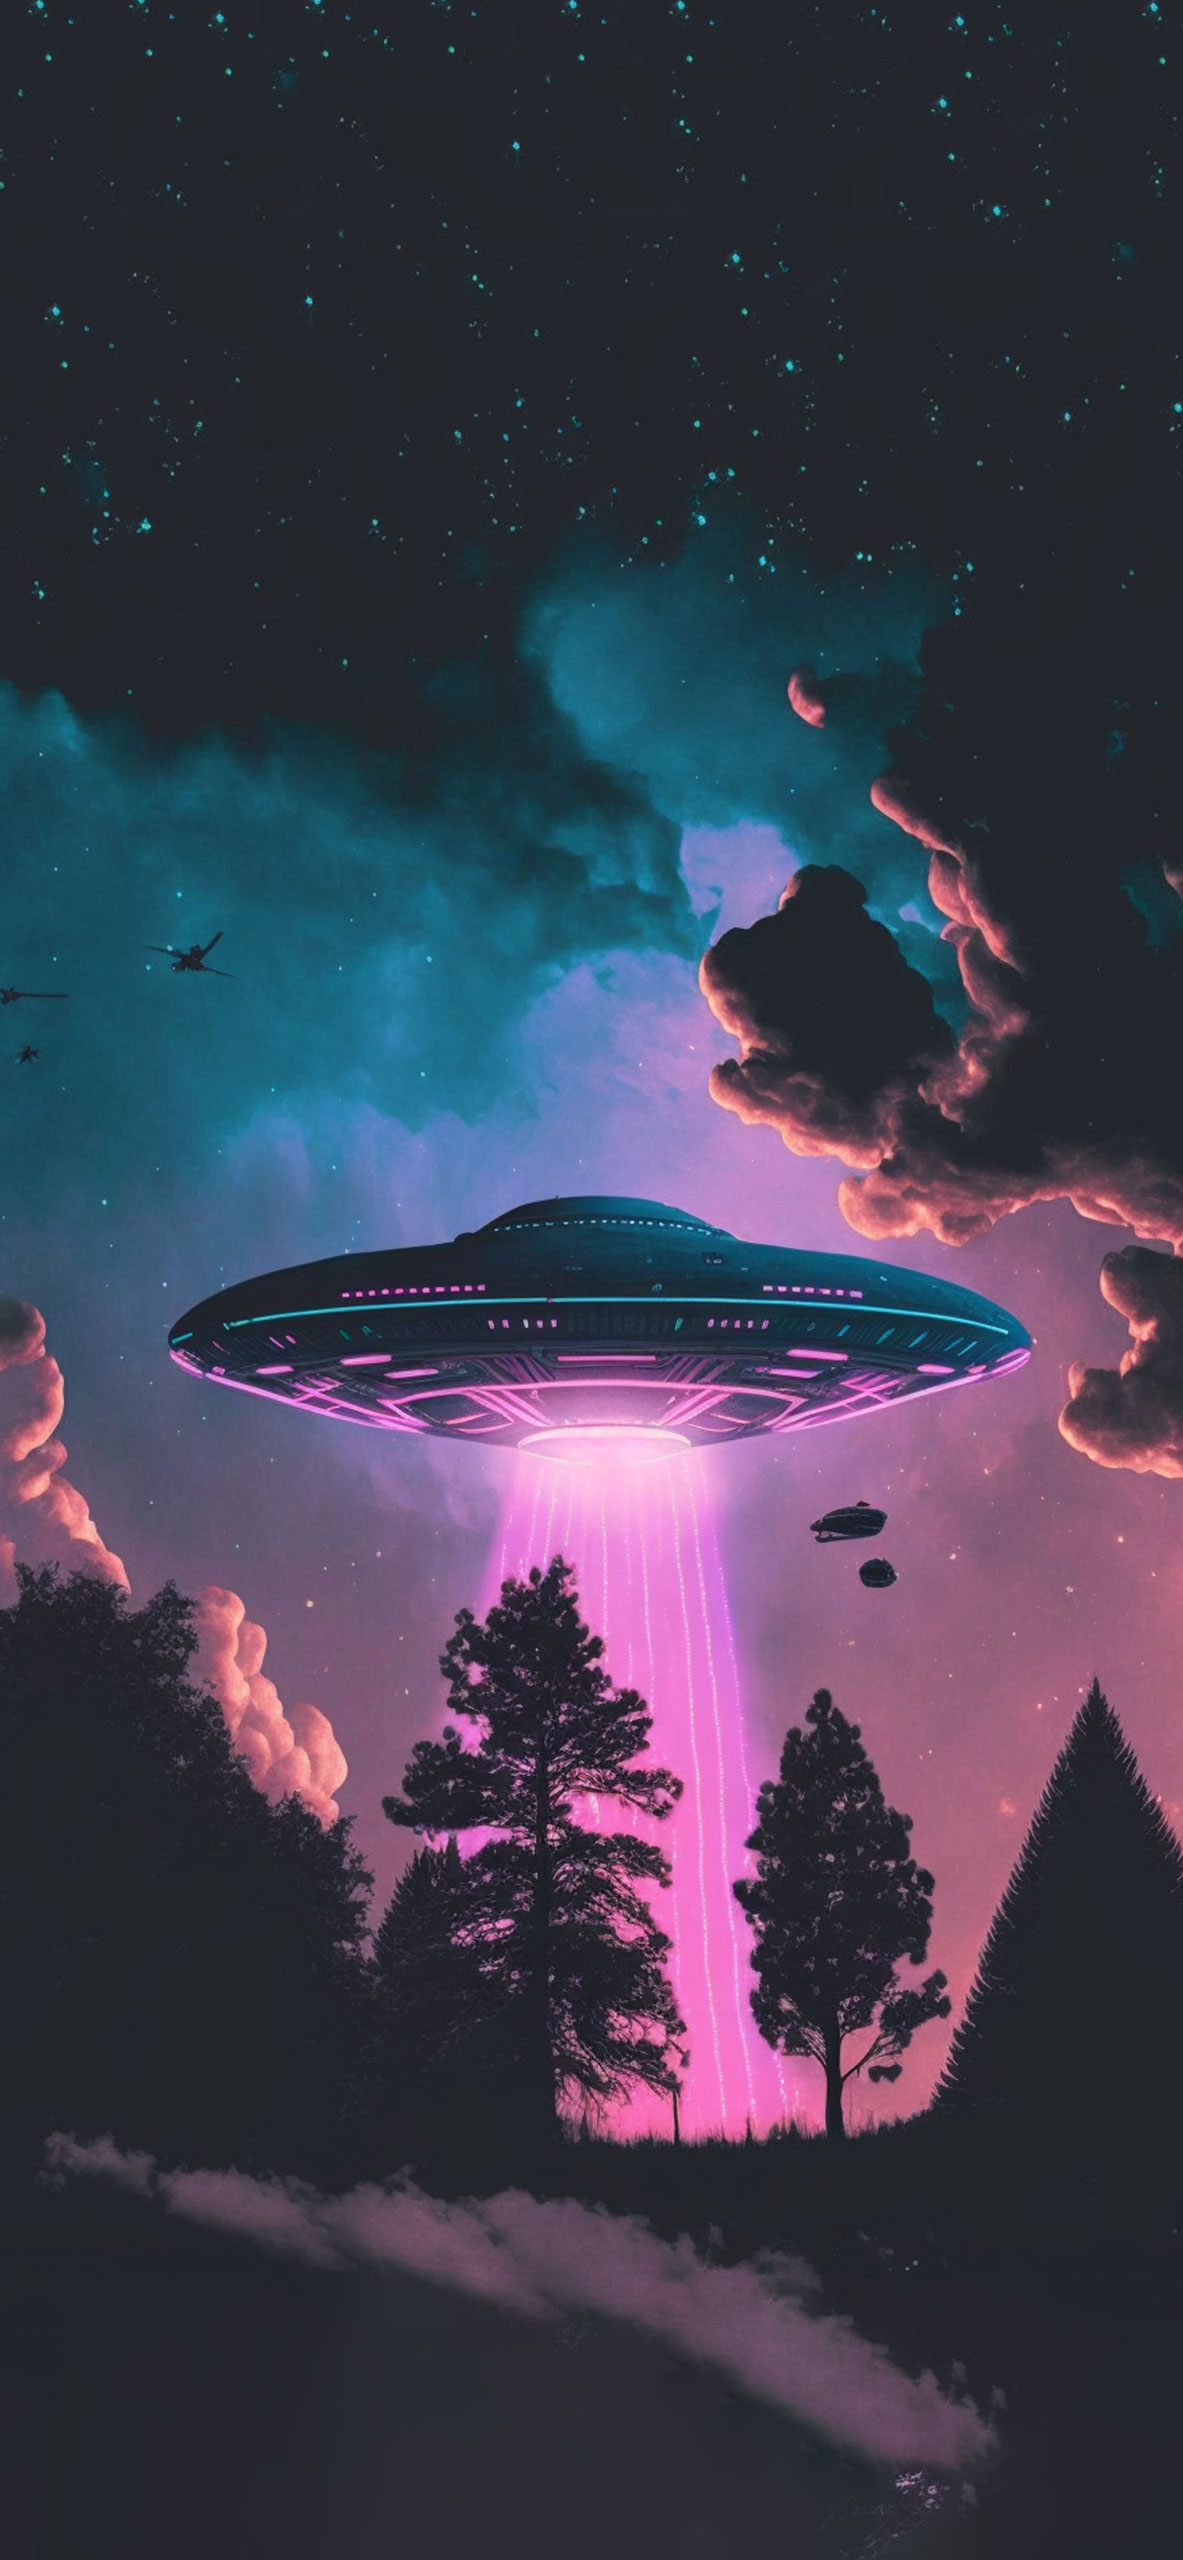 Ufo abduction beam aesthetic wallpaper